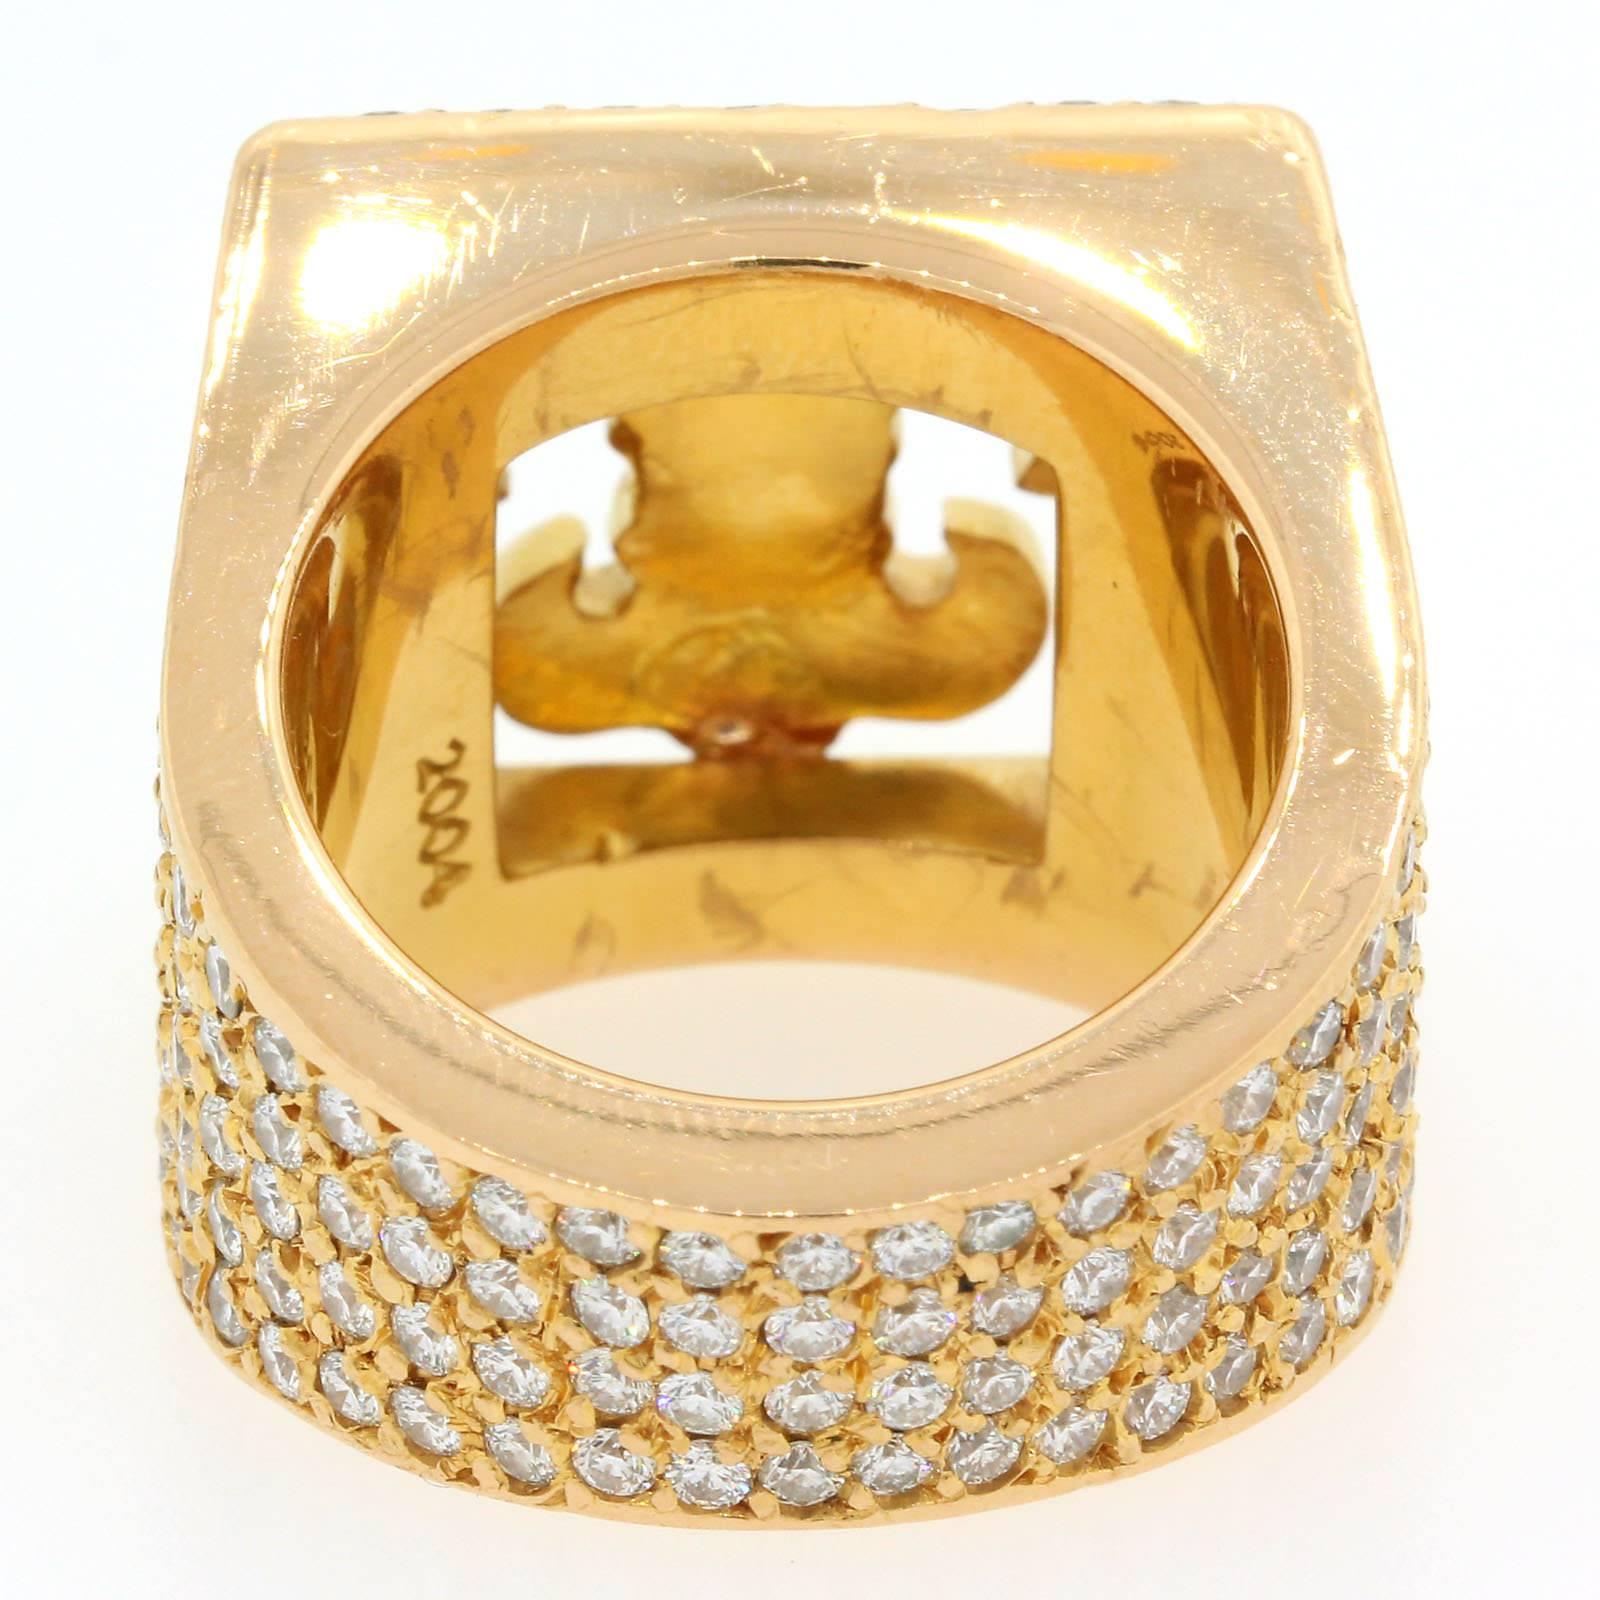 Brilliant, Sparkly & Fashionable this Chrome Hearts Fleur de Lis emblem 22KT gold ring flashes  5.50 carats of Round Brilliant Cut Diamonds.  Two Princess Cut Diamonds accent the Fleur de Lis. 